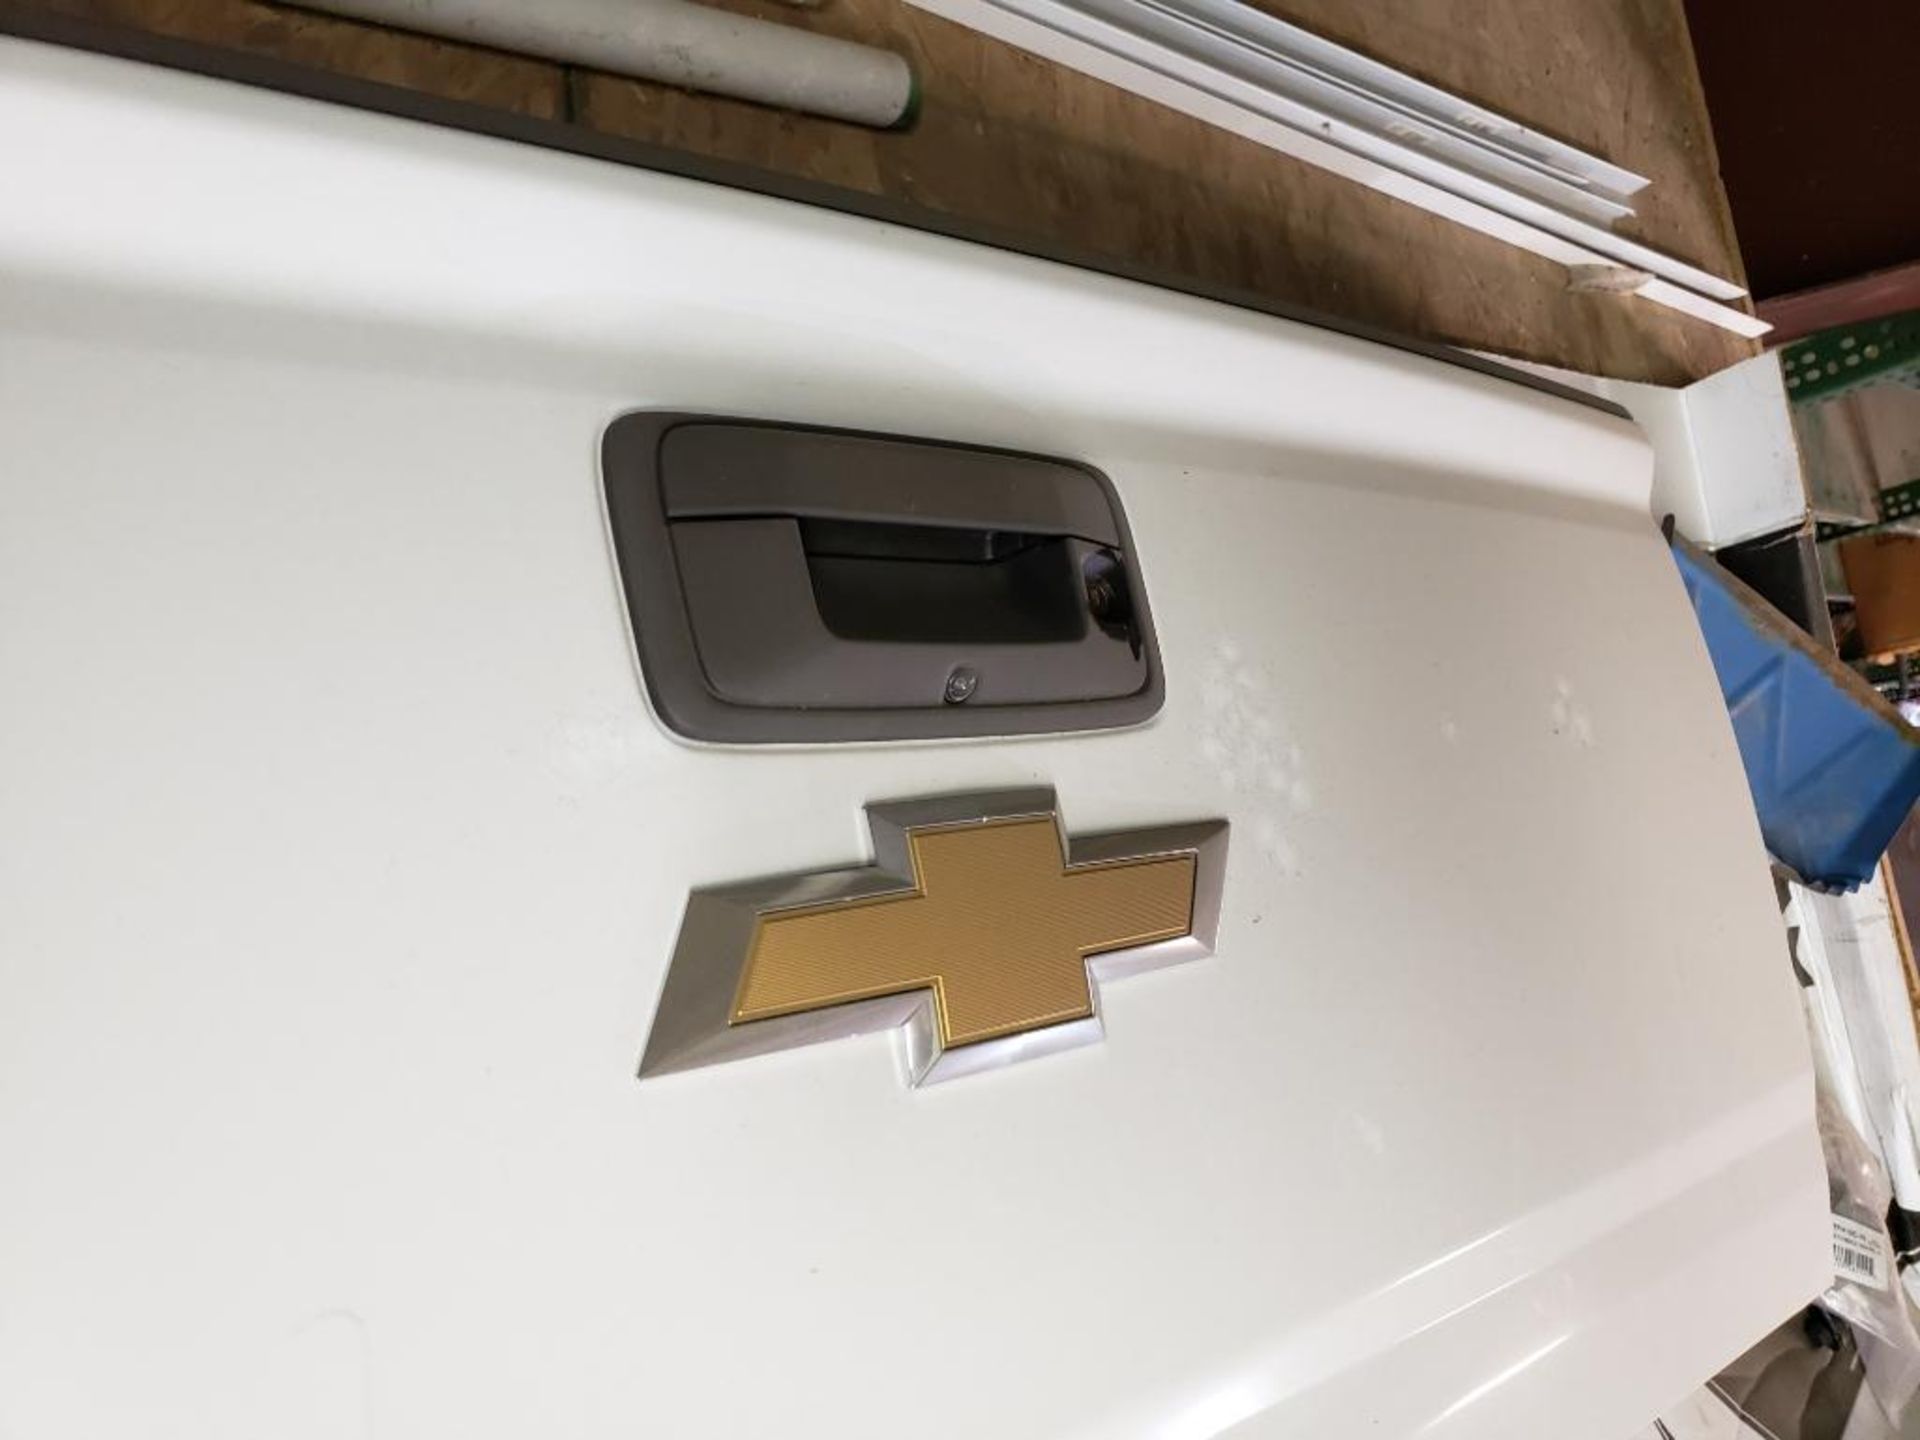 Chevrolet Colorado tailgate. - Image 4 of 4